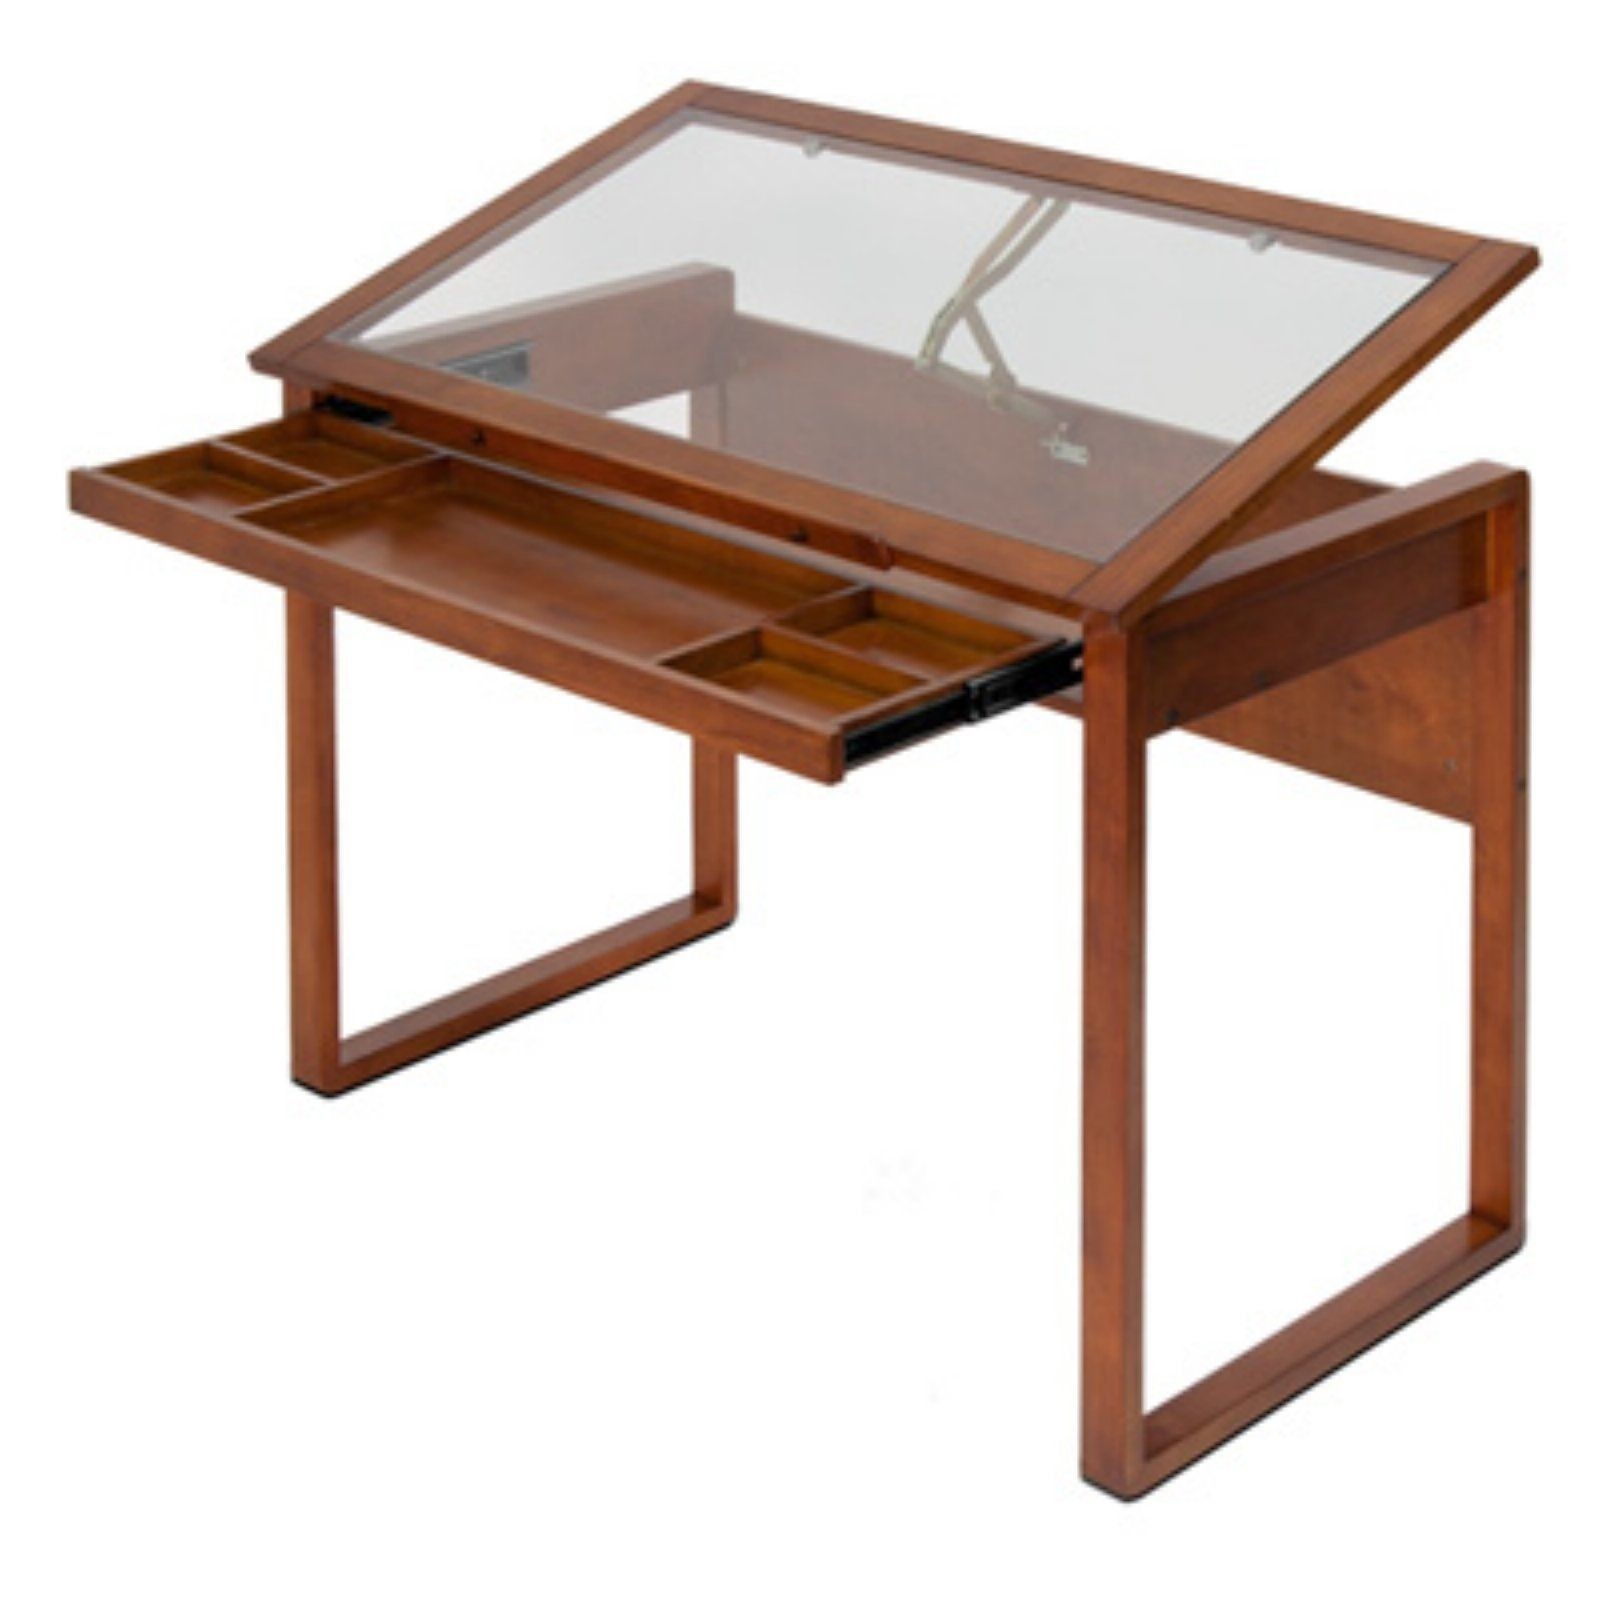 Studio designs ponderosa glass topped drafting table